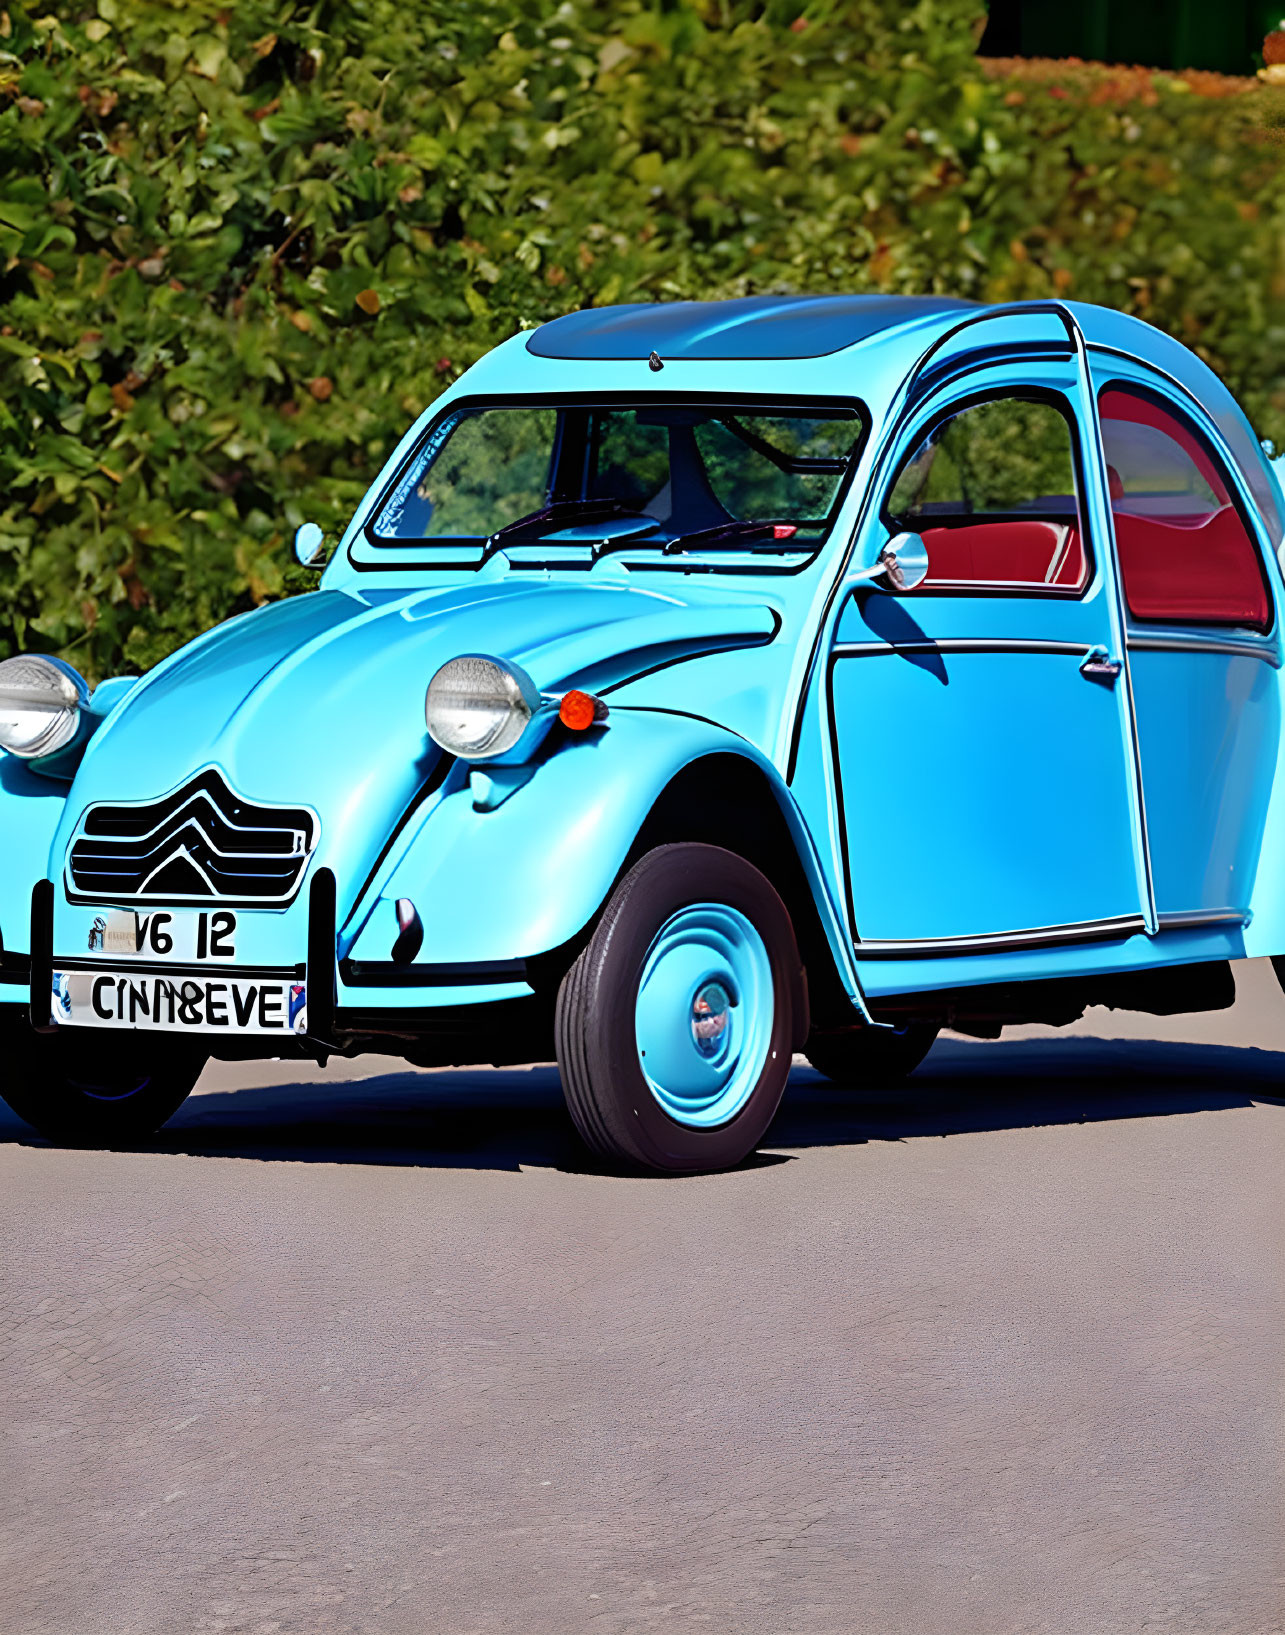 Vintage Sky Blue Citroën 2CV Car with Open Door on Sunny Day